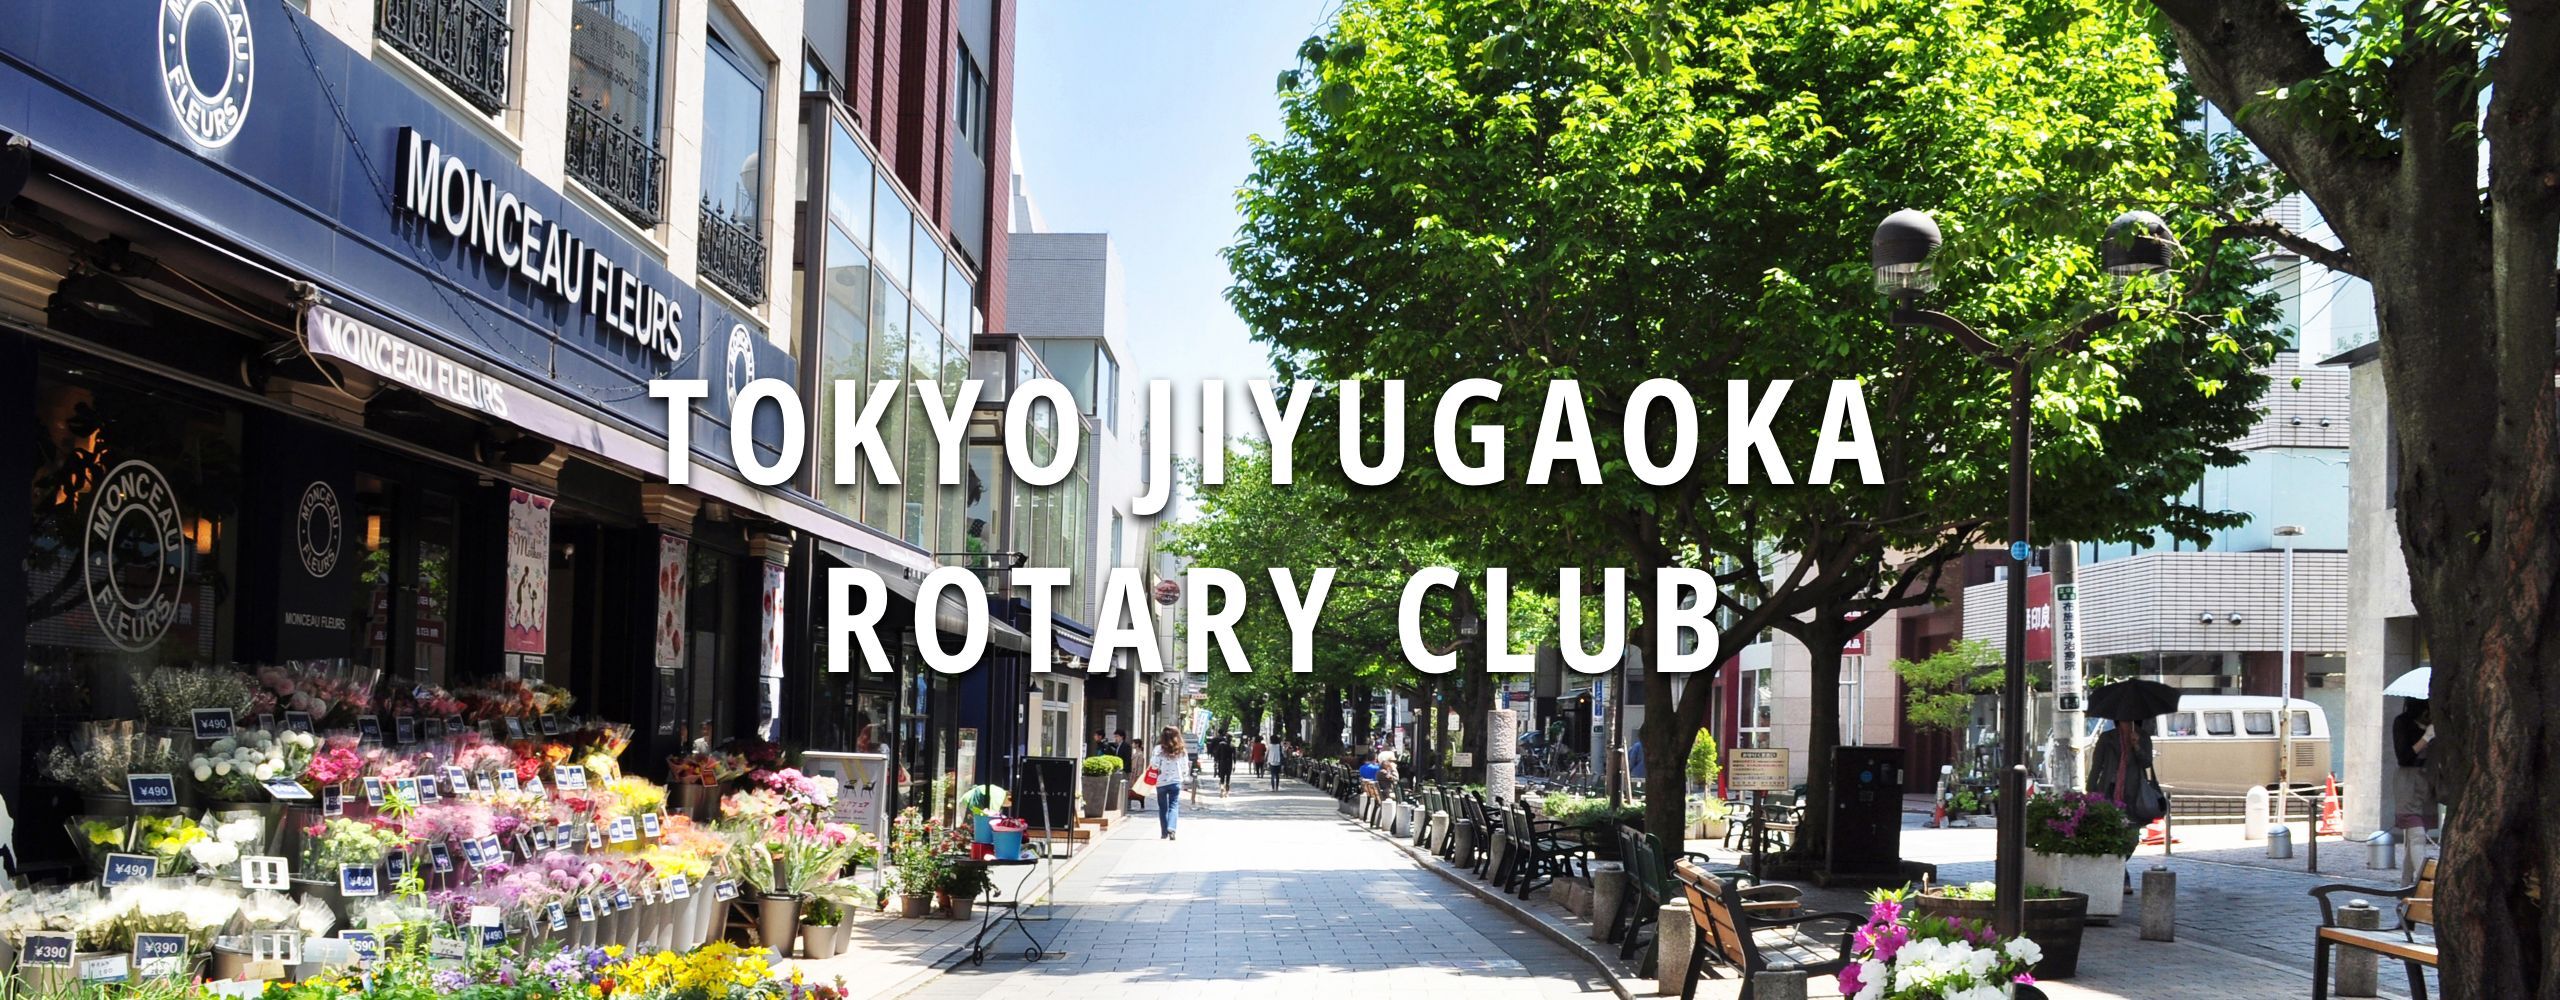 TOKYO JIYUGAOKA ROTARY CULB